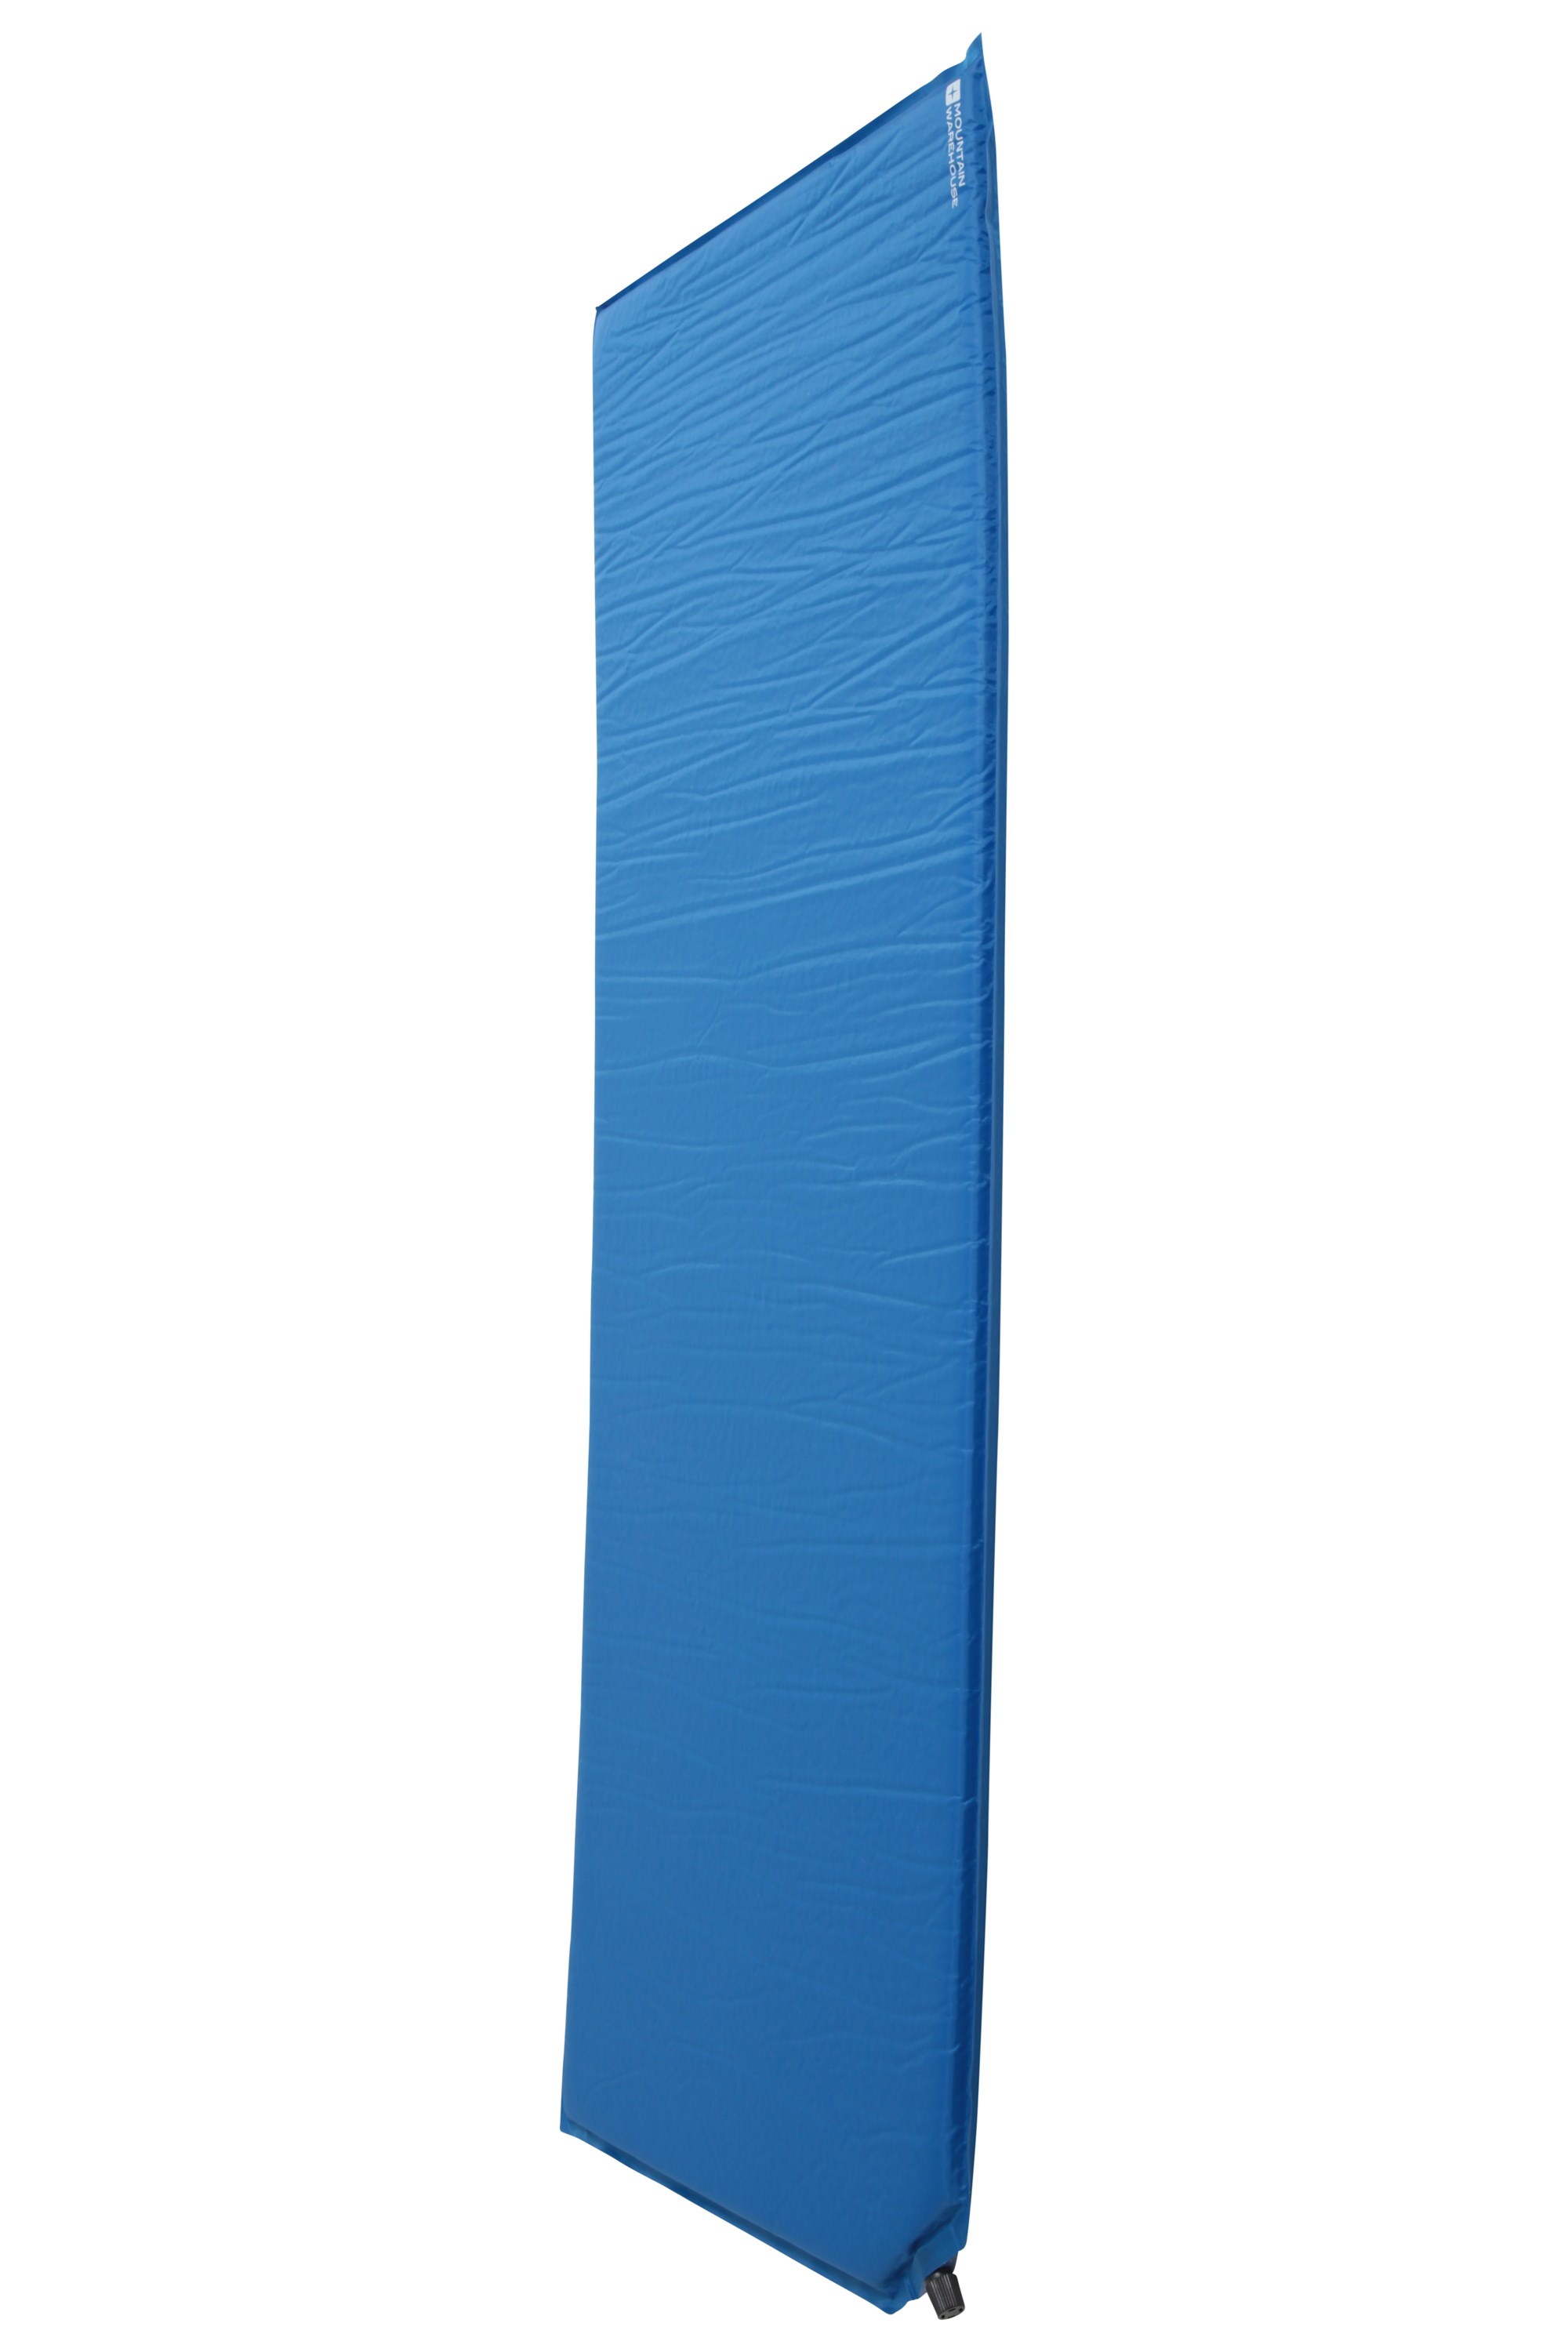 3/4 Length Self Inflating Mat - Blue